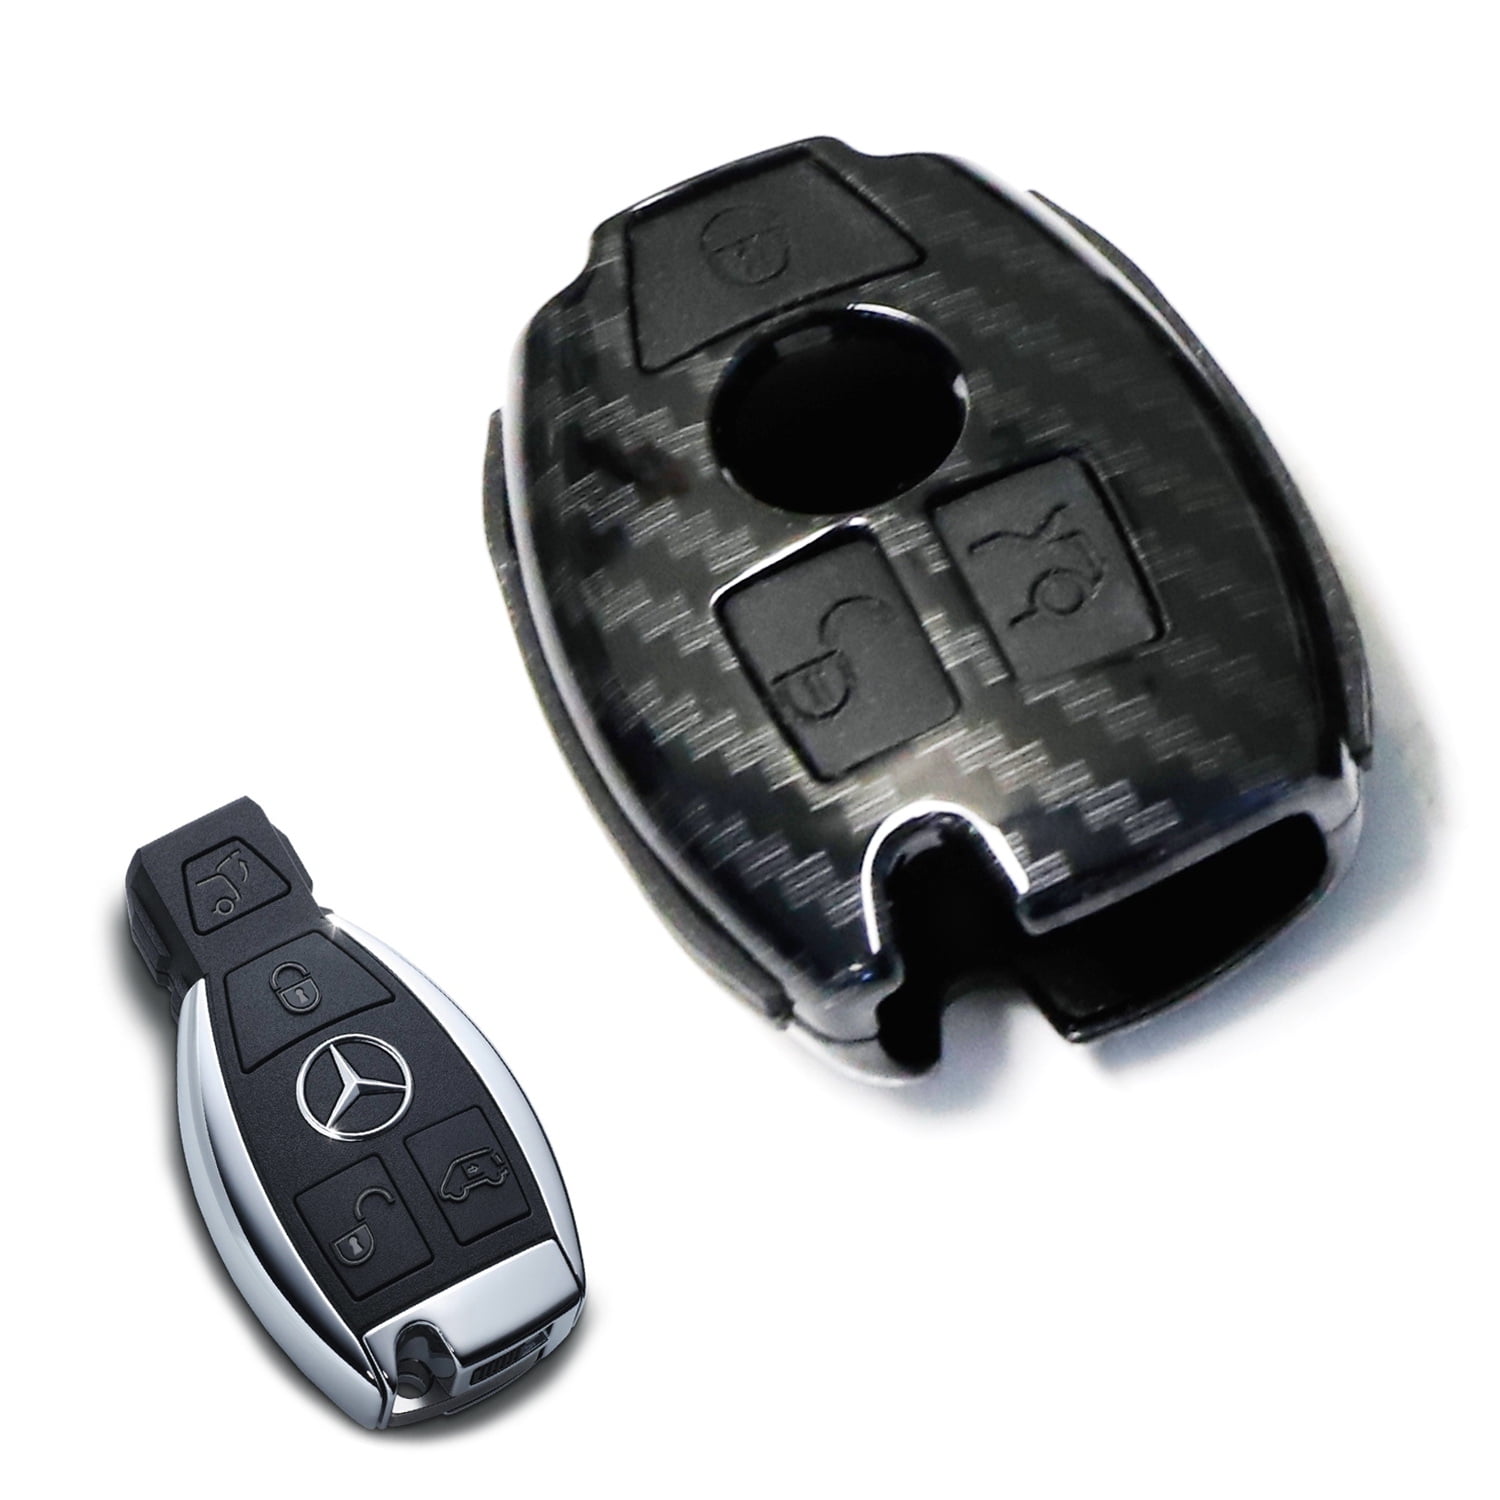 Akay Remote key cover case fob for Mercedes-Benz 3b c e sl e GL cl R AMG Black 